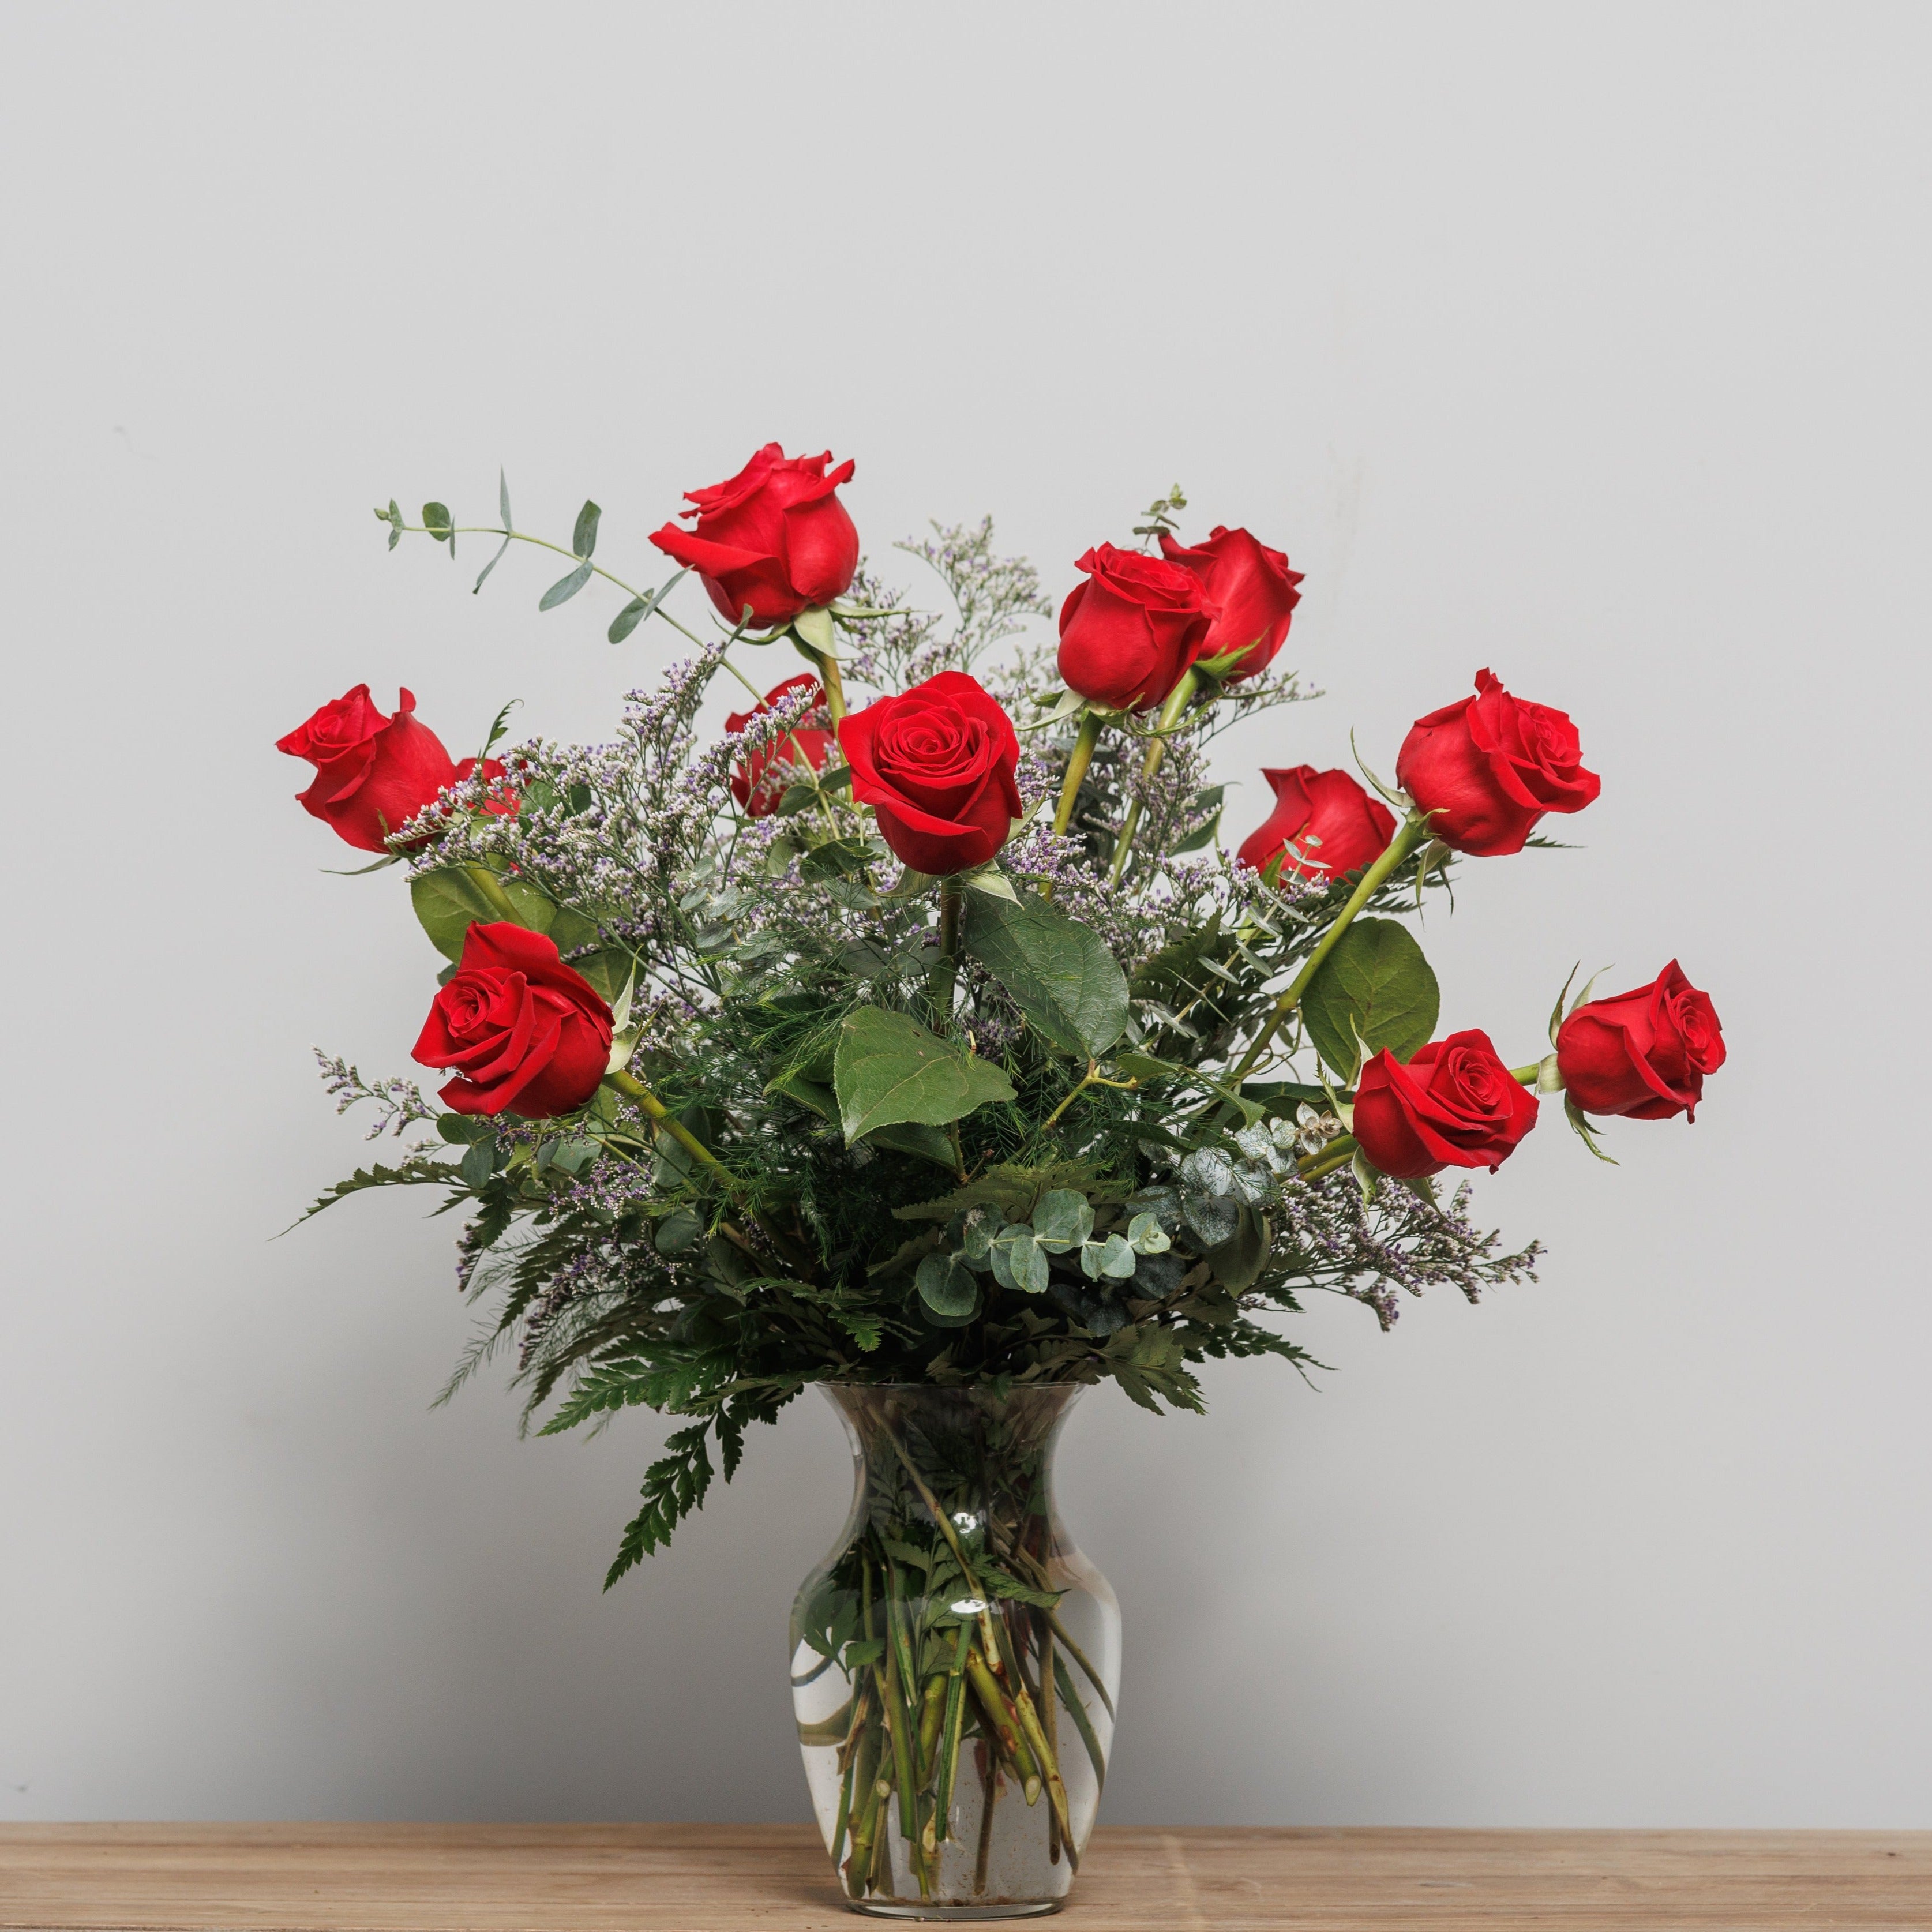 A dozen red roses arranged in a vase.